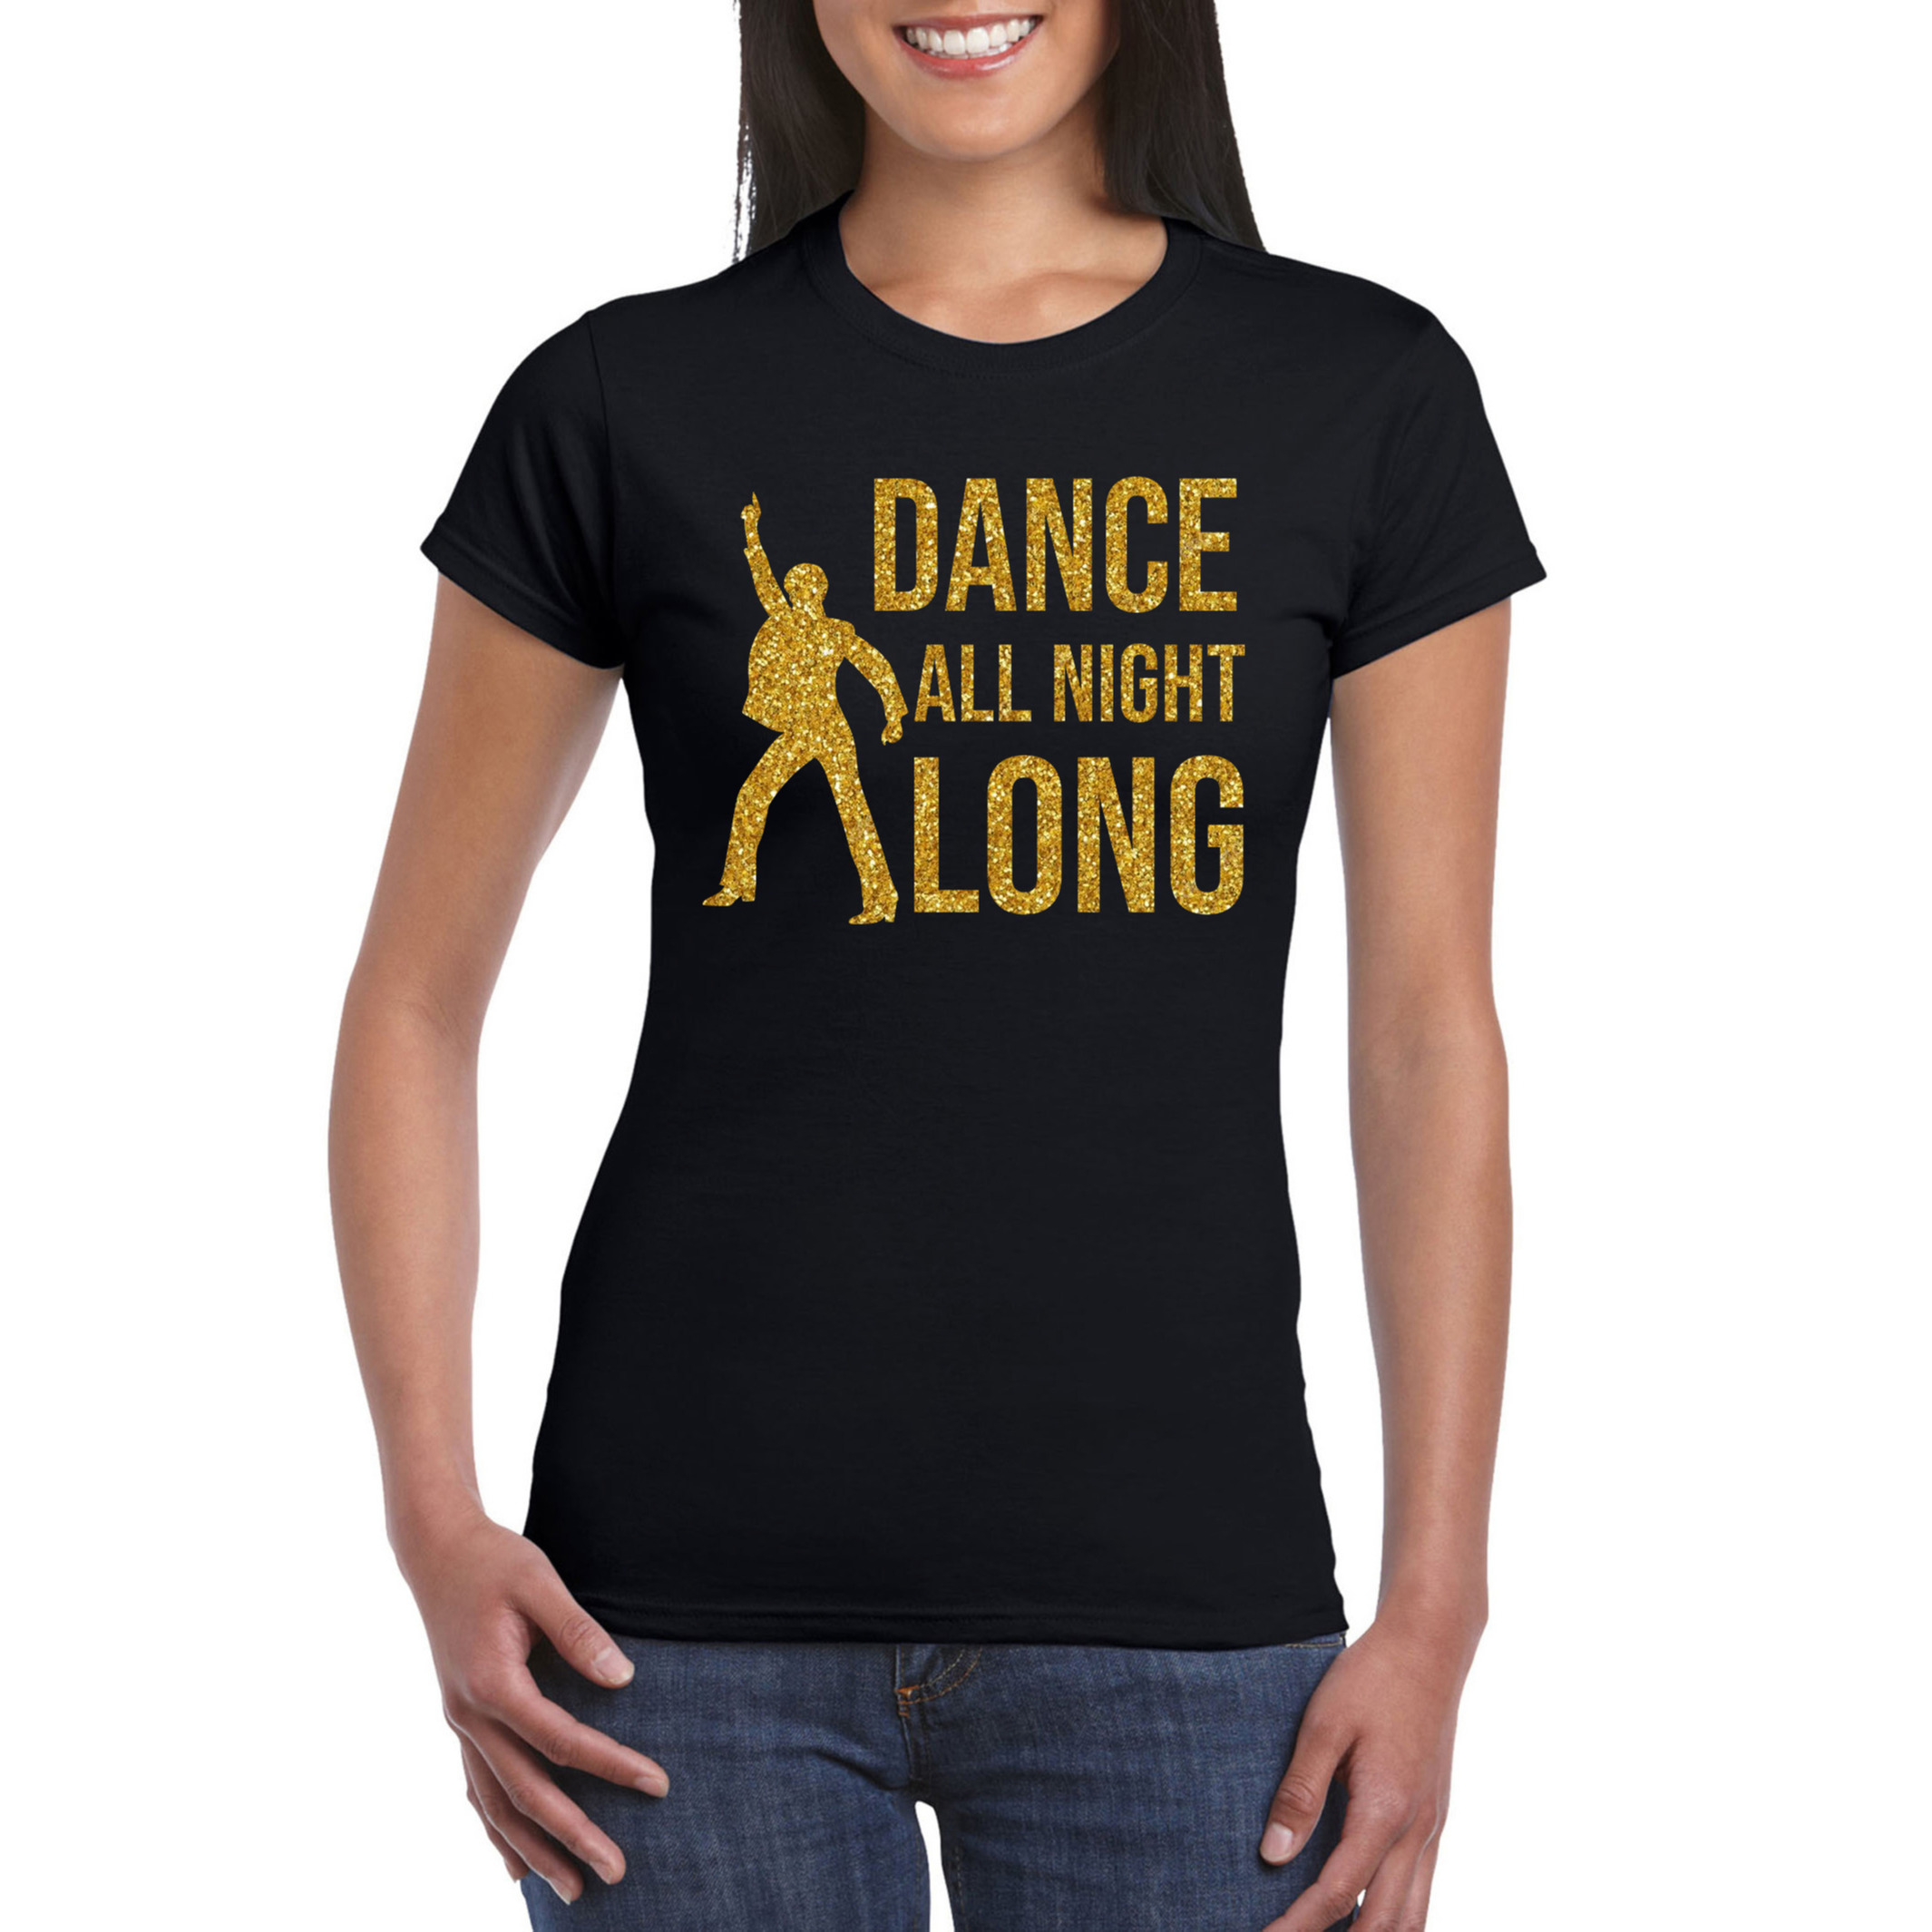 Dance all night long-70s-80s t-shirt zwart voor dames